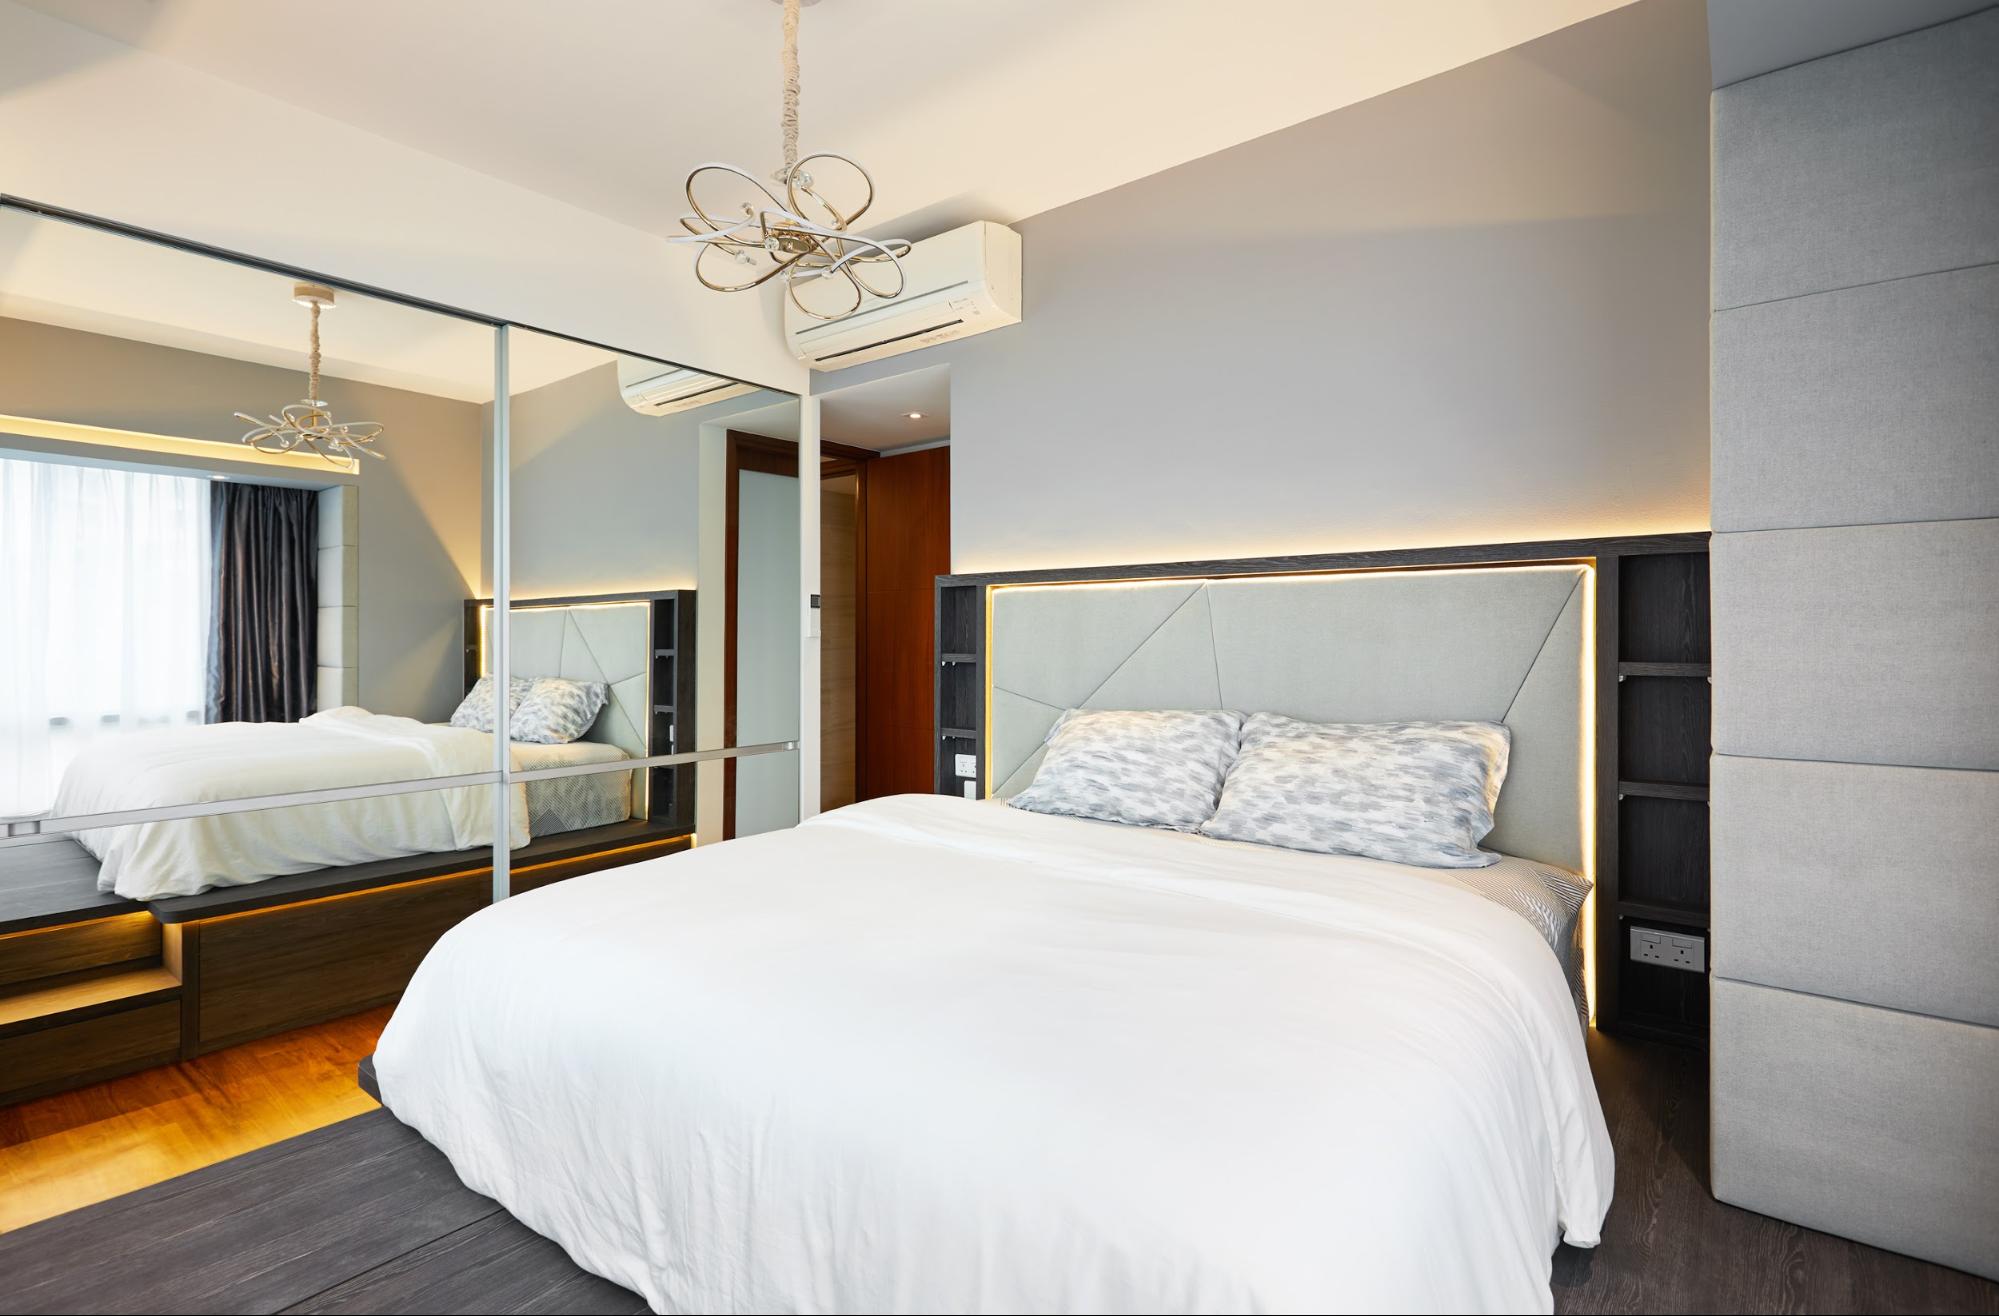 hdb renovation - floor length mirrors in bedroom